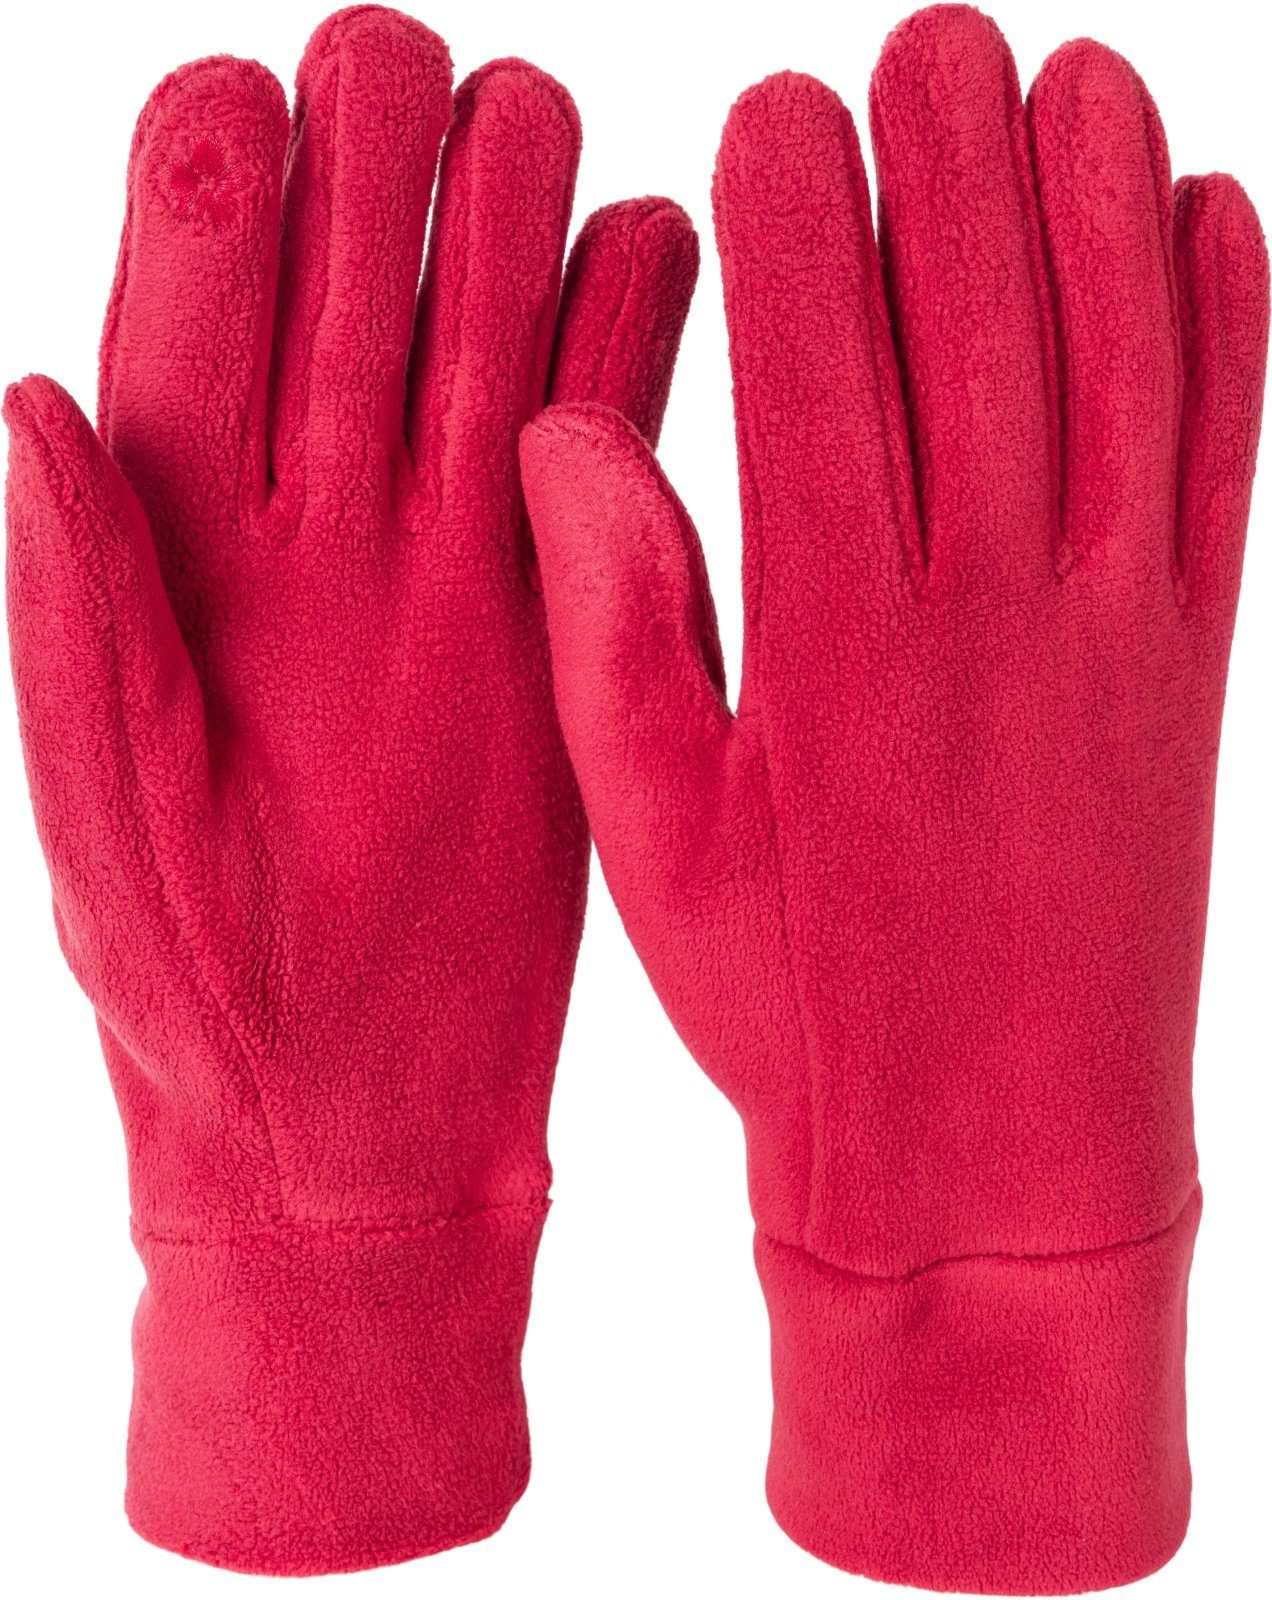 styleBREAKER Fleece Einfarbige Touchscreen Handschuhe Fleecehandschuhe Weinrot